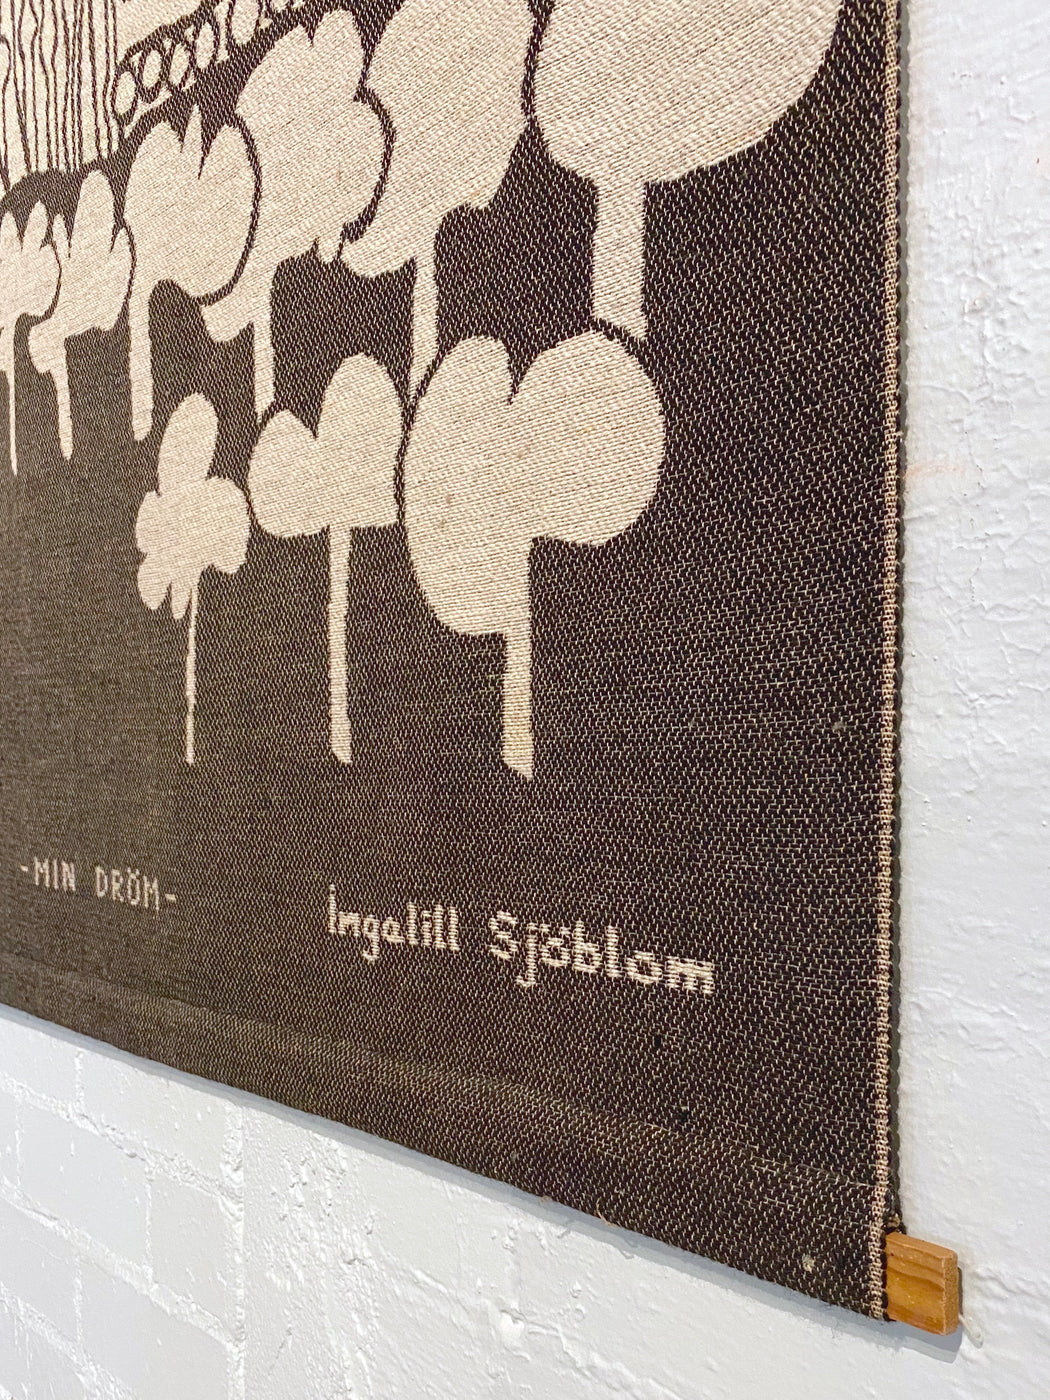 Hand-woven Tapestry by Ingalill Sjöblom